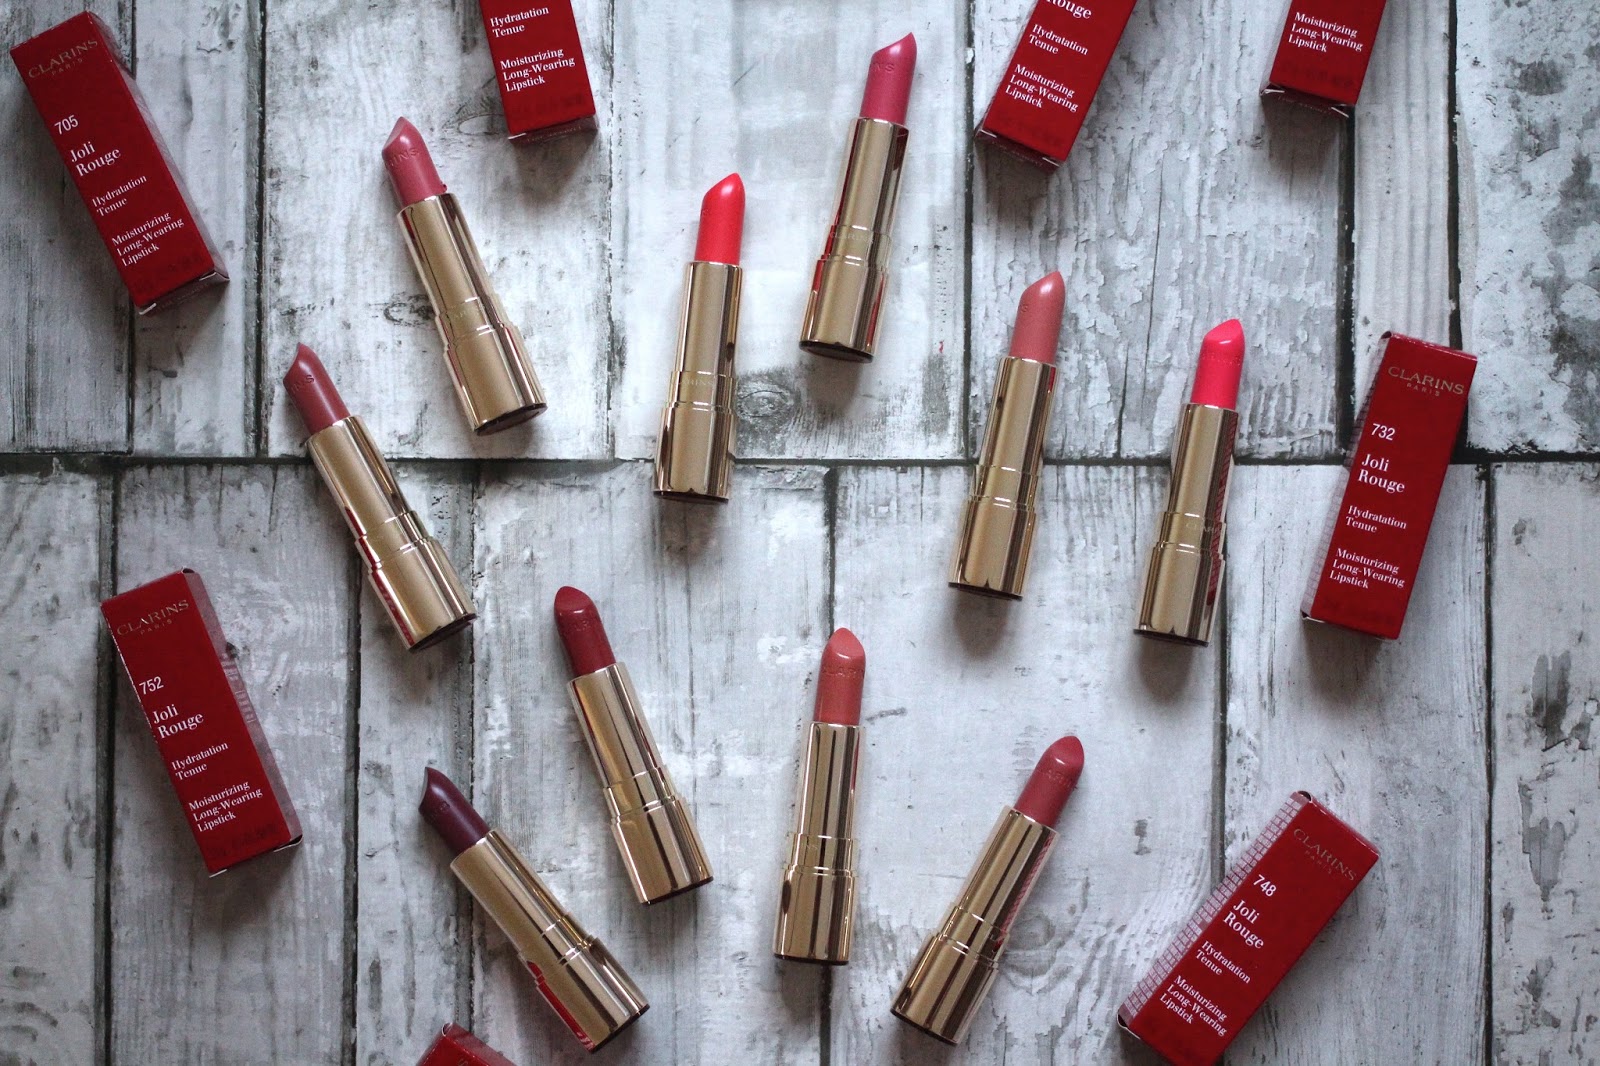 clarins joli rouge lipsticks